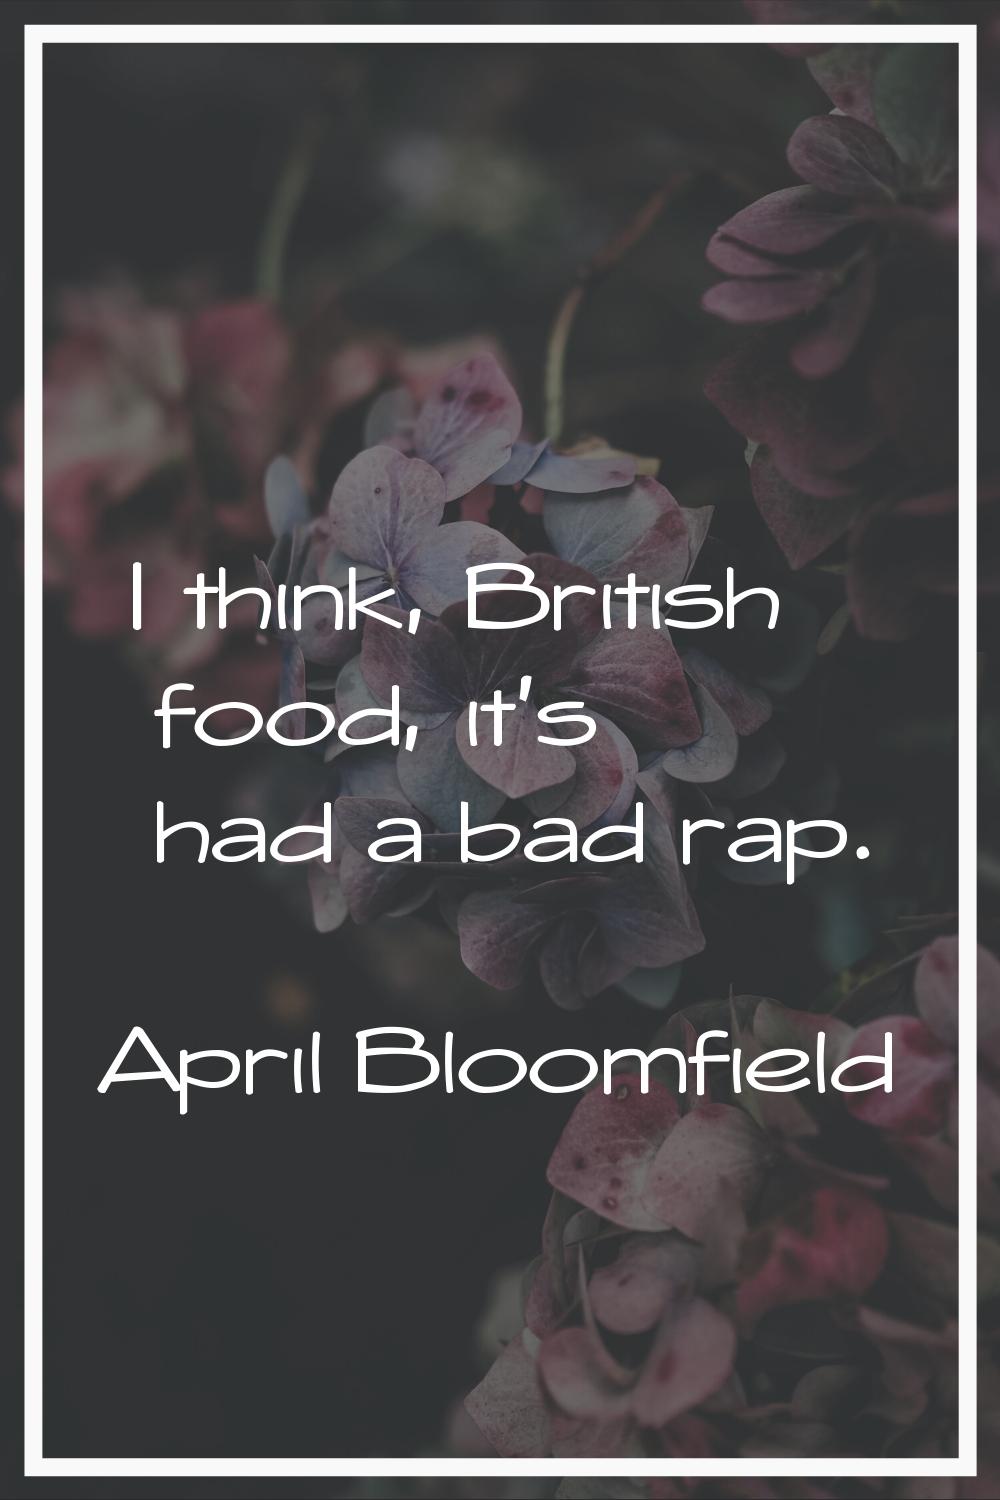 I think, British food, it's had a bad rap.